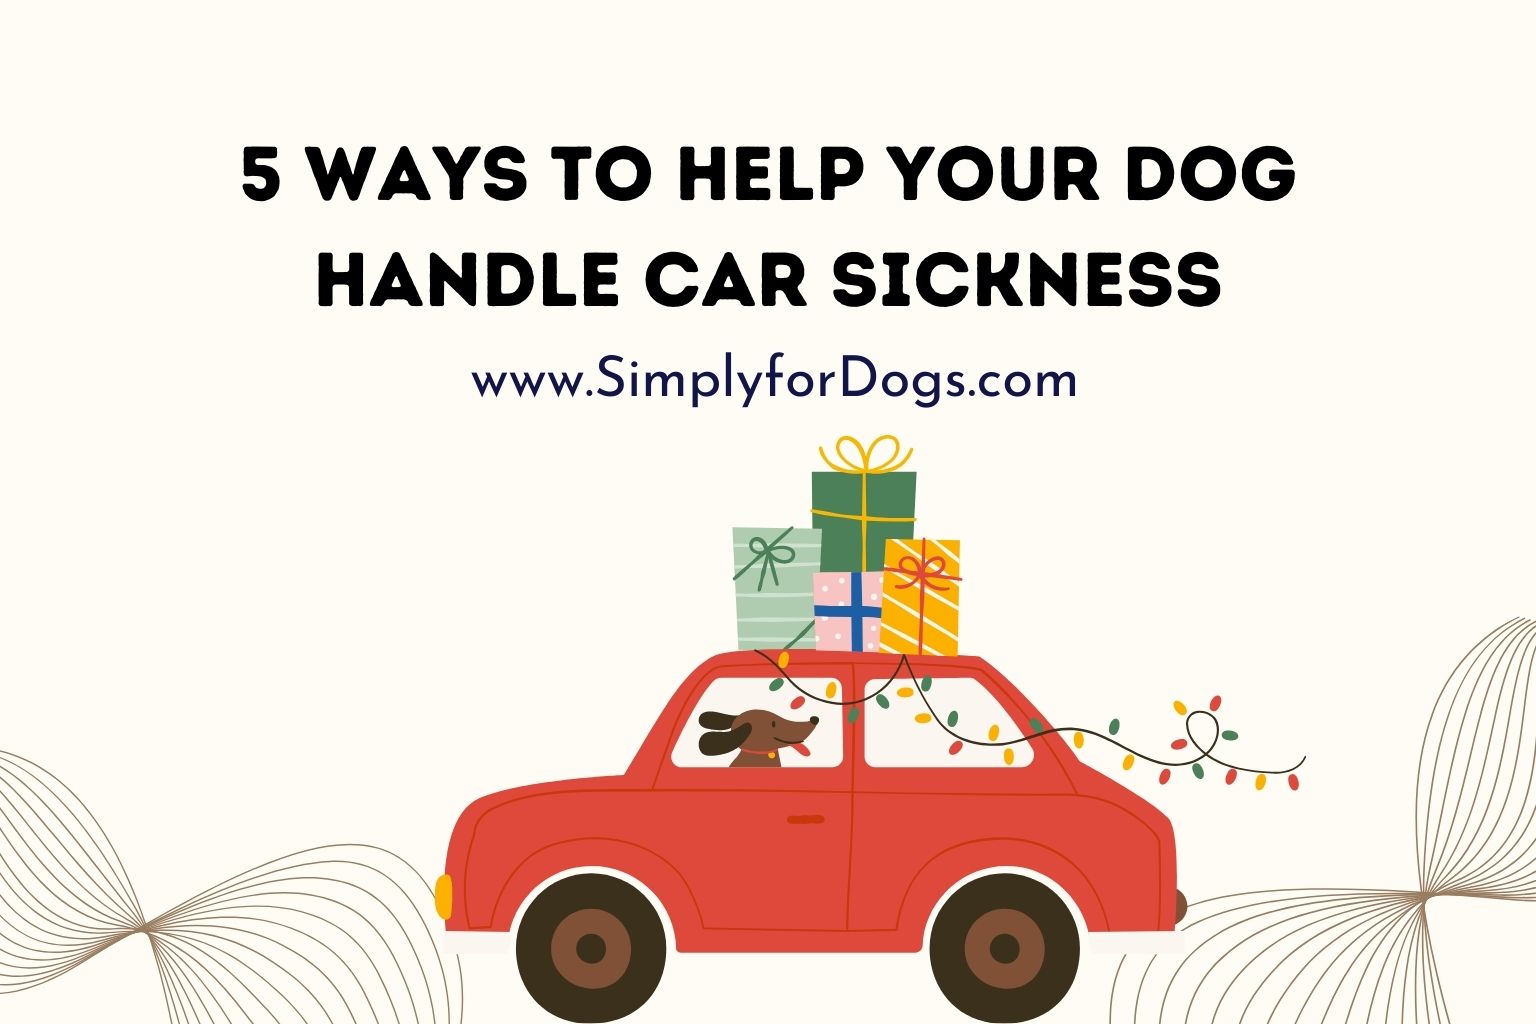 5 Ways to Help Your Dog Handle Car Sickness